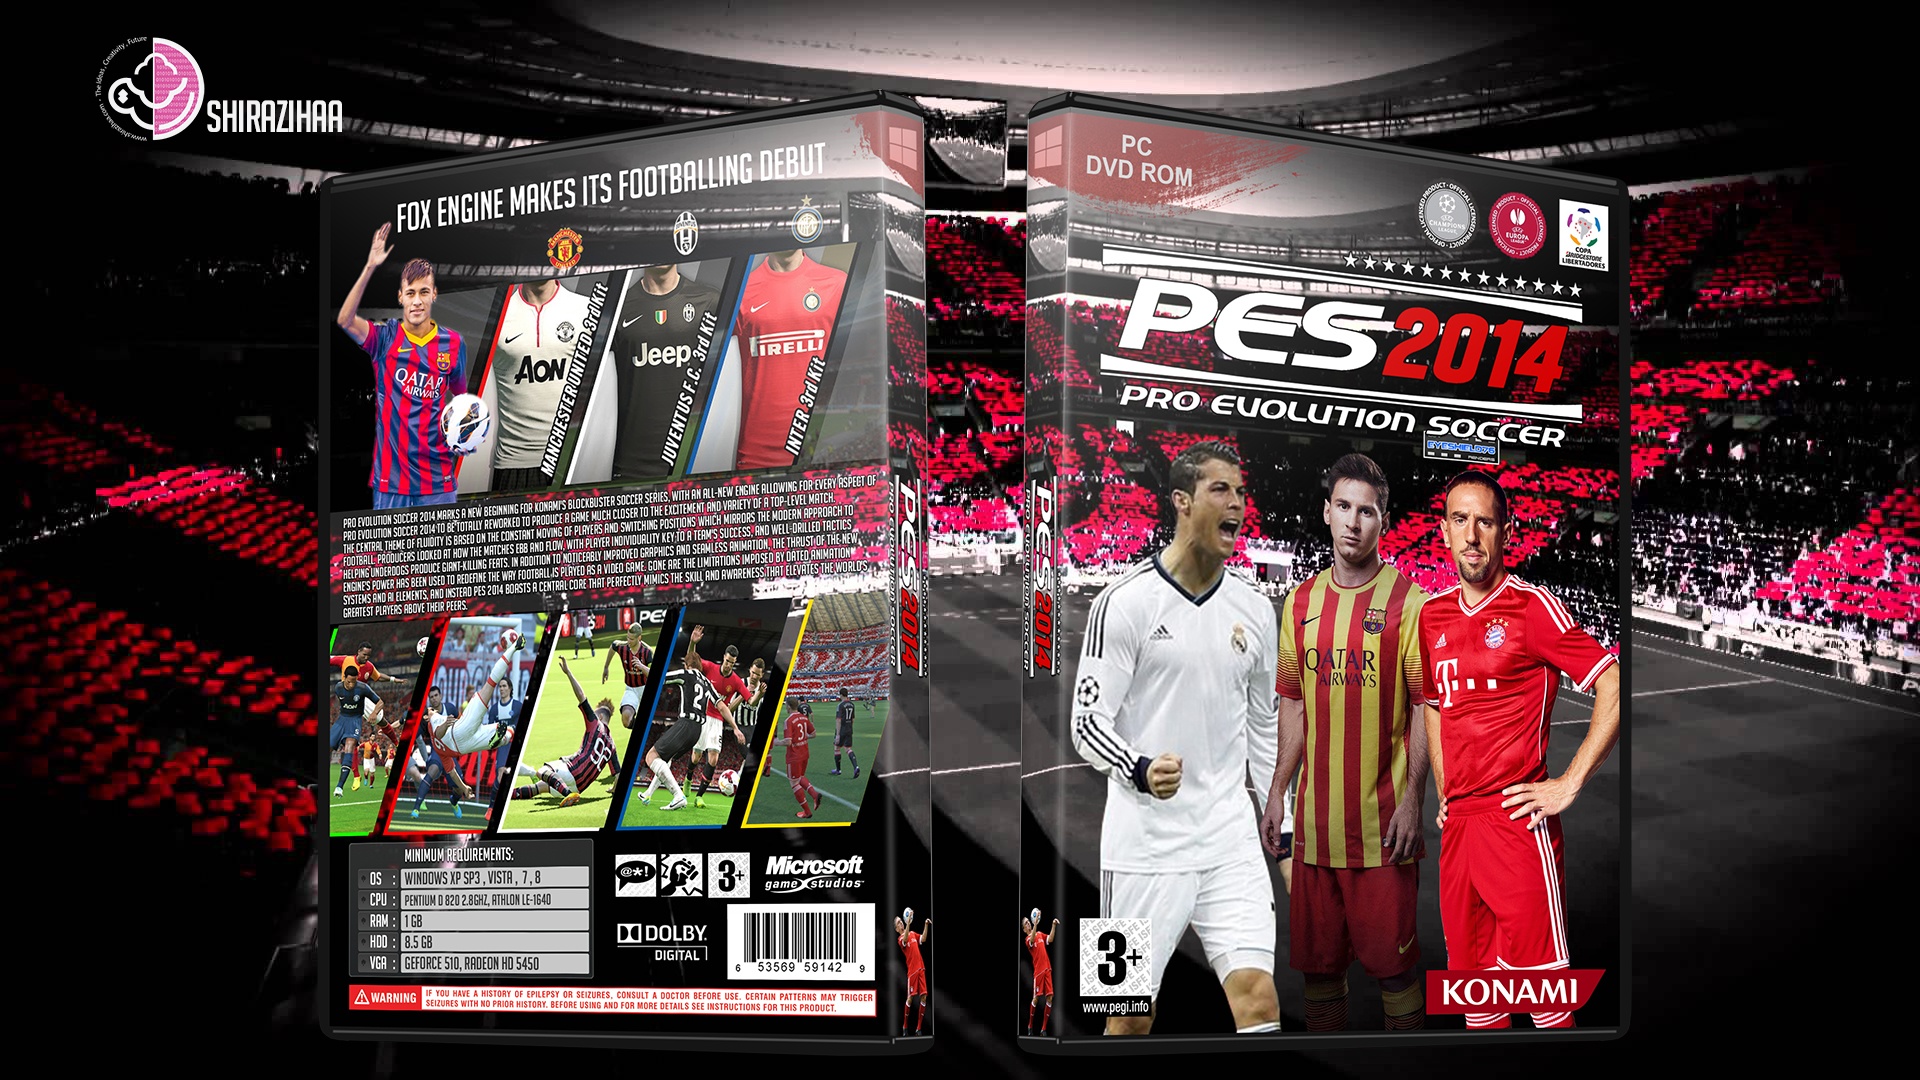 Pro Evolution Soccer 2014 box cover